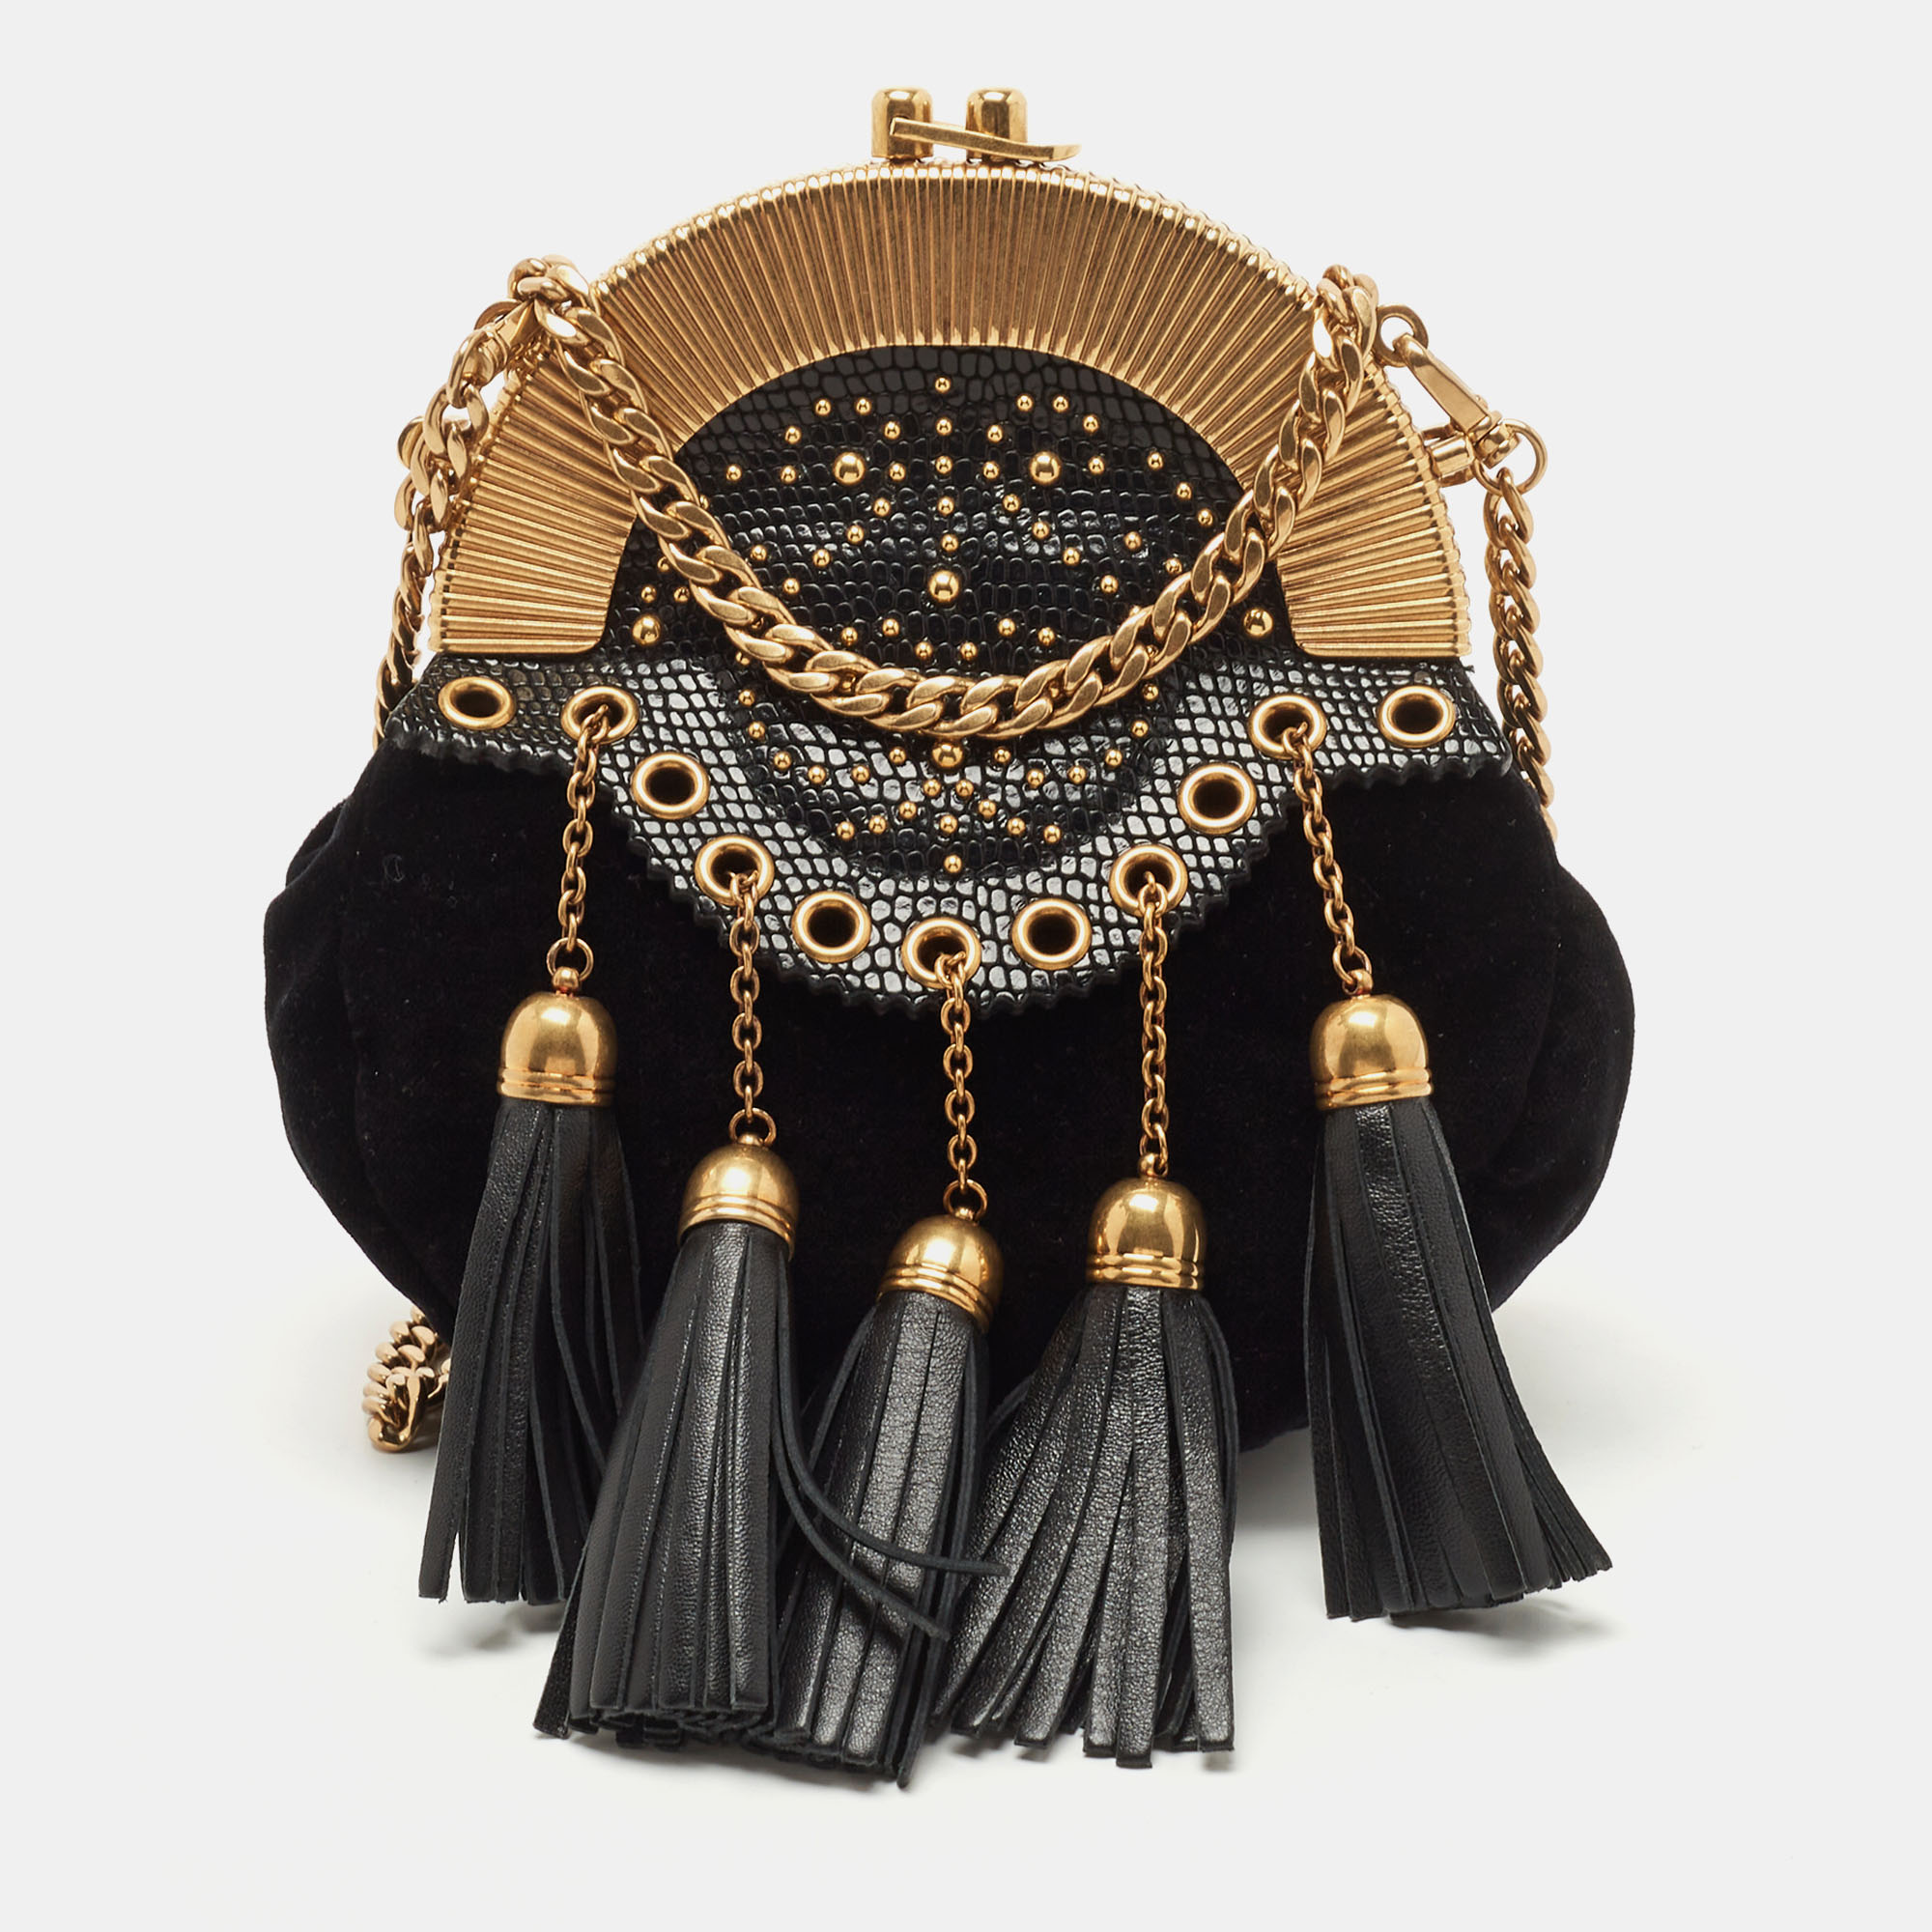 Authentic New Miu Miu Black Velvet Tassel Chain Hobo Bag